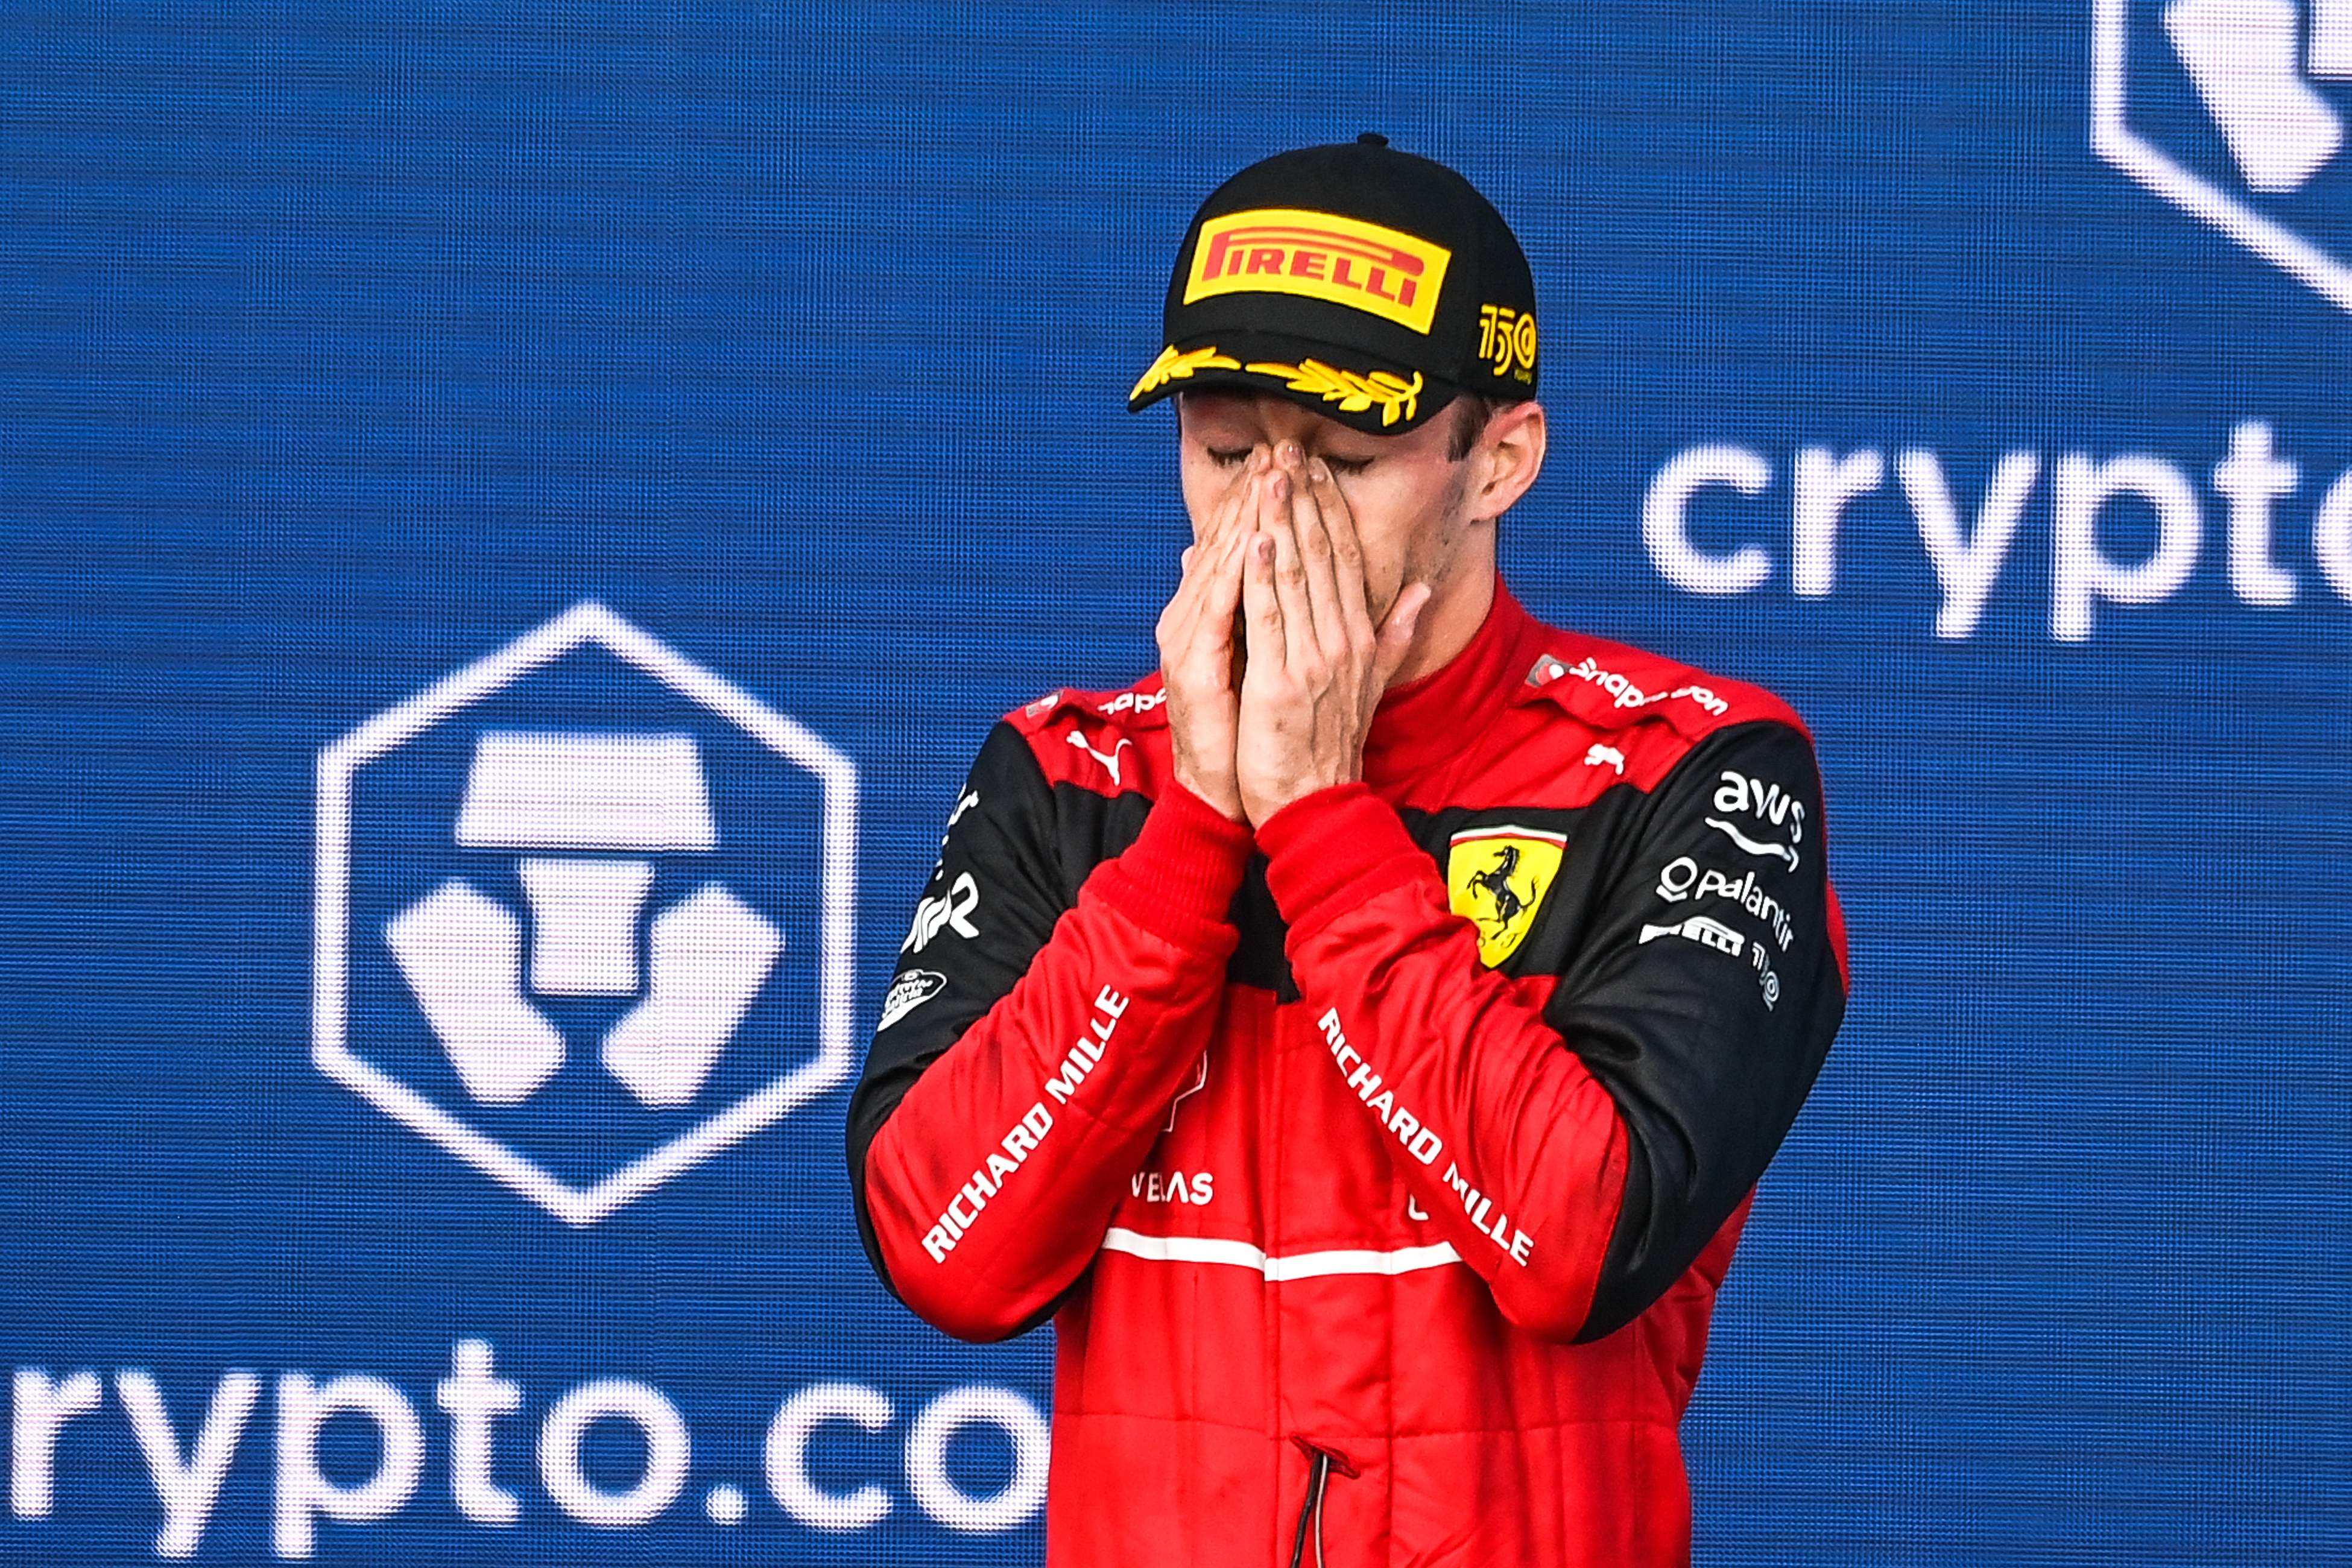 Charles Lecerlc has had more luck with his F1 Ferrari this season